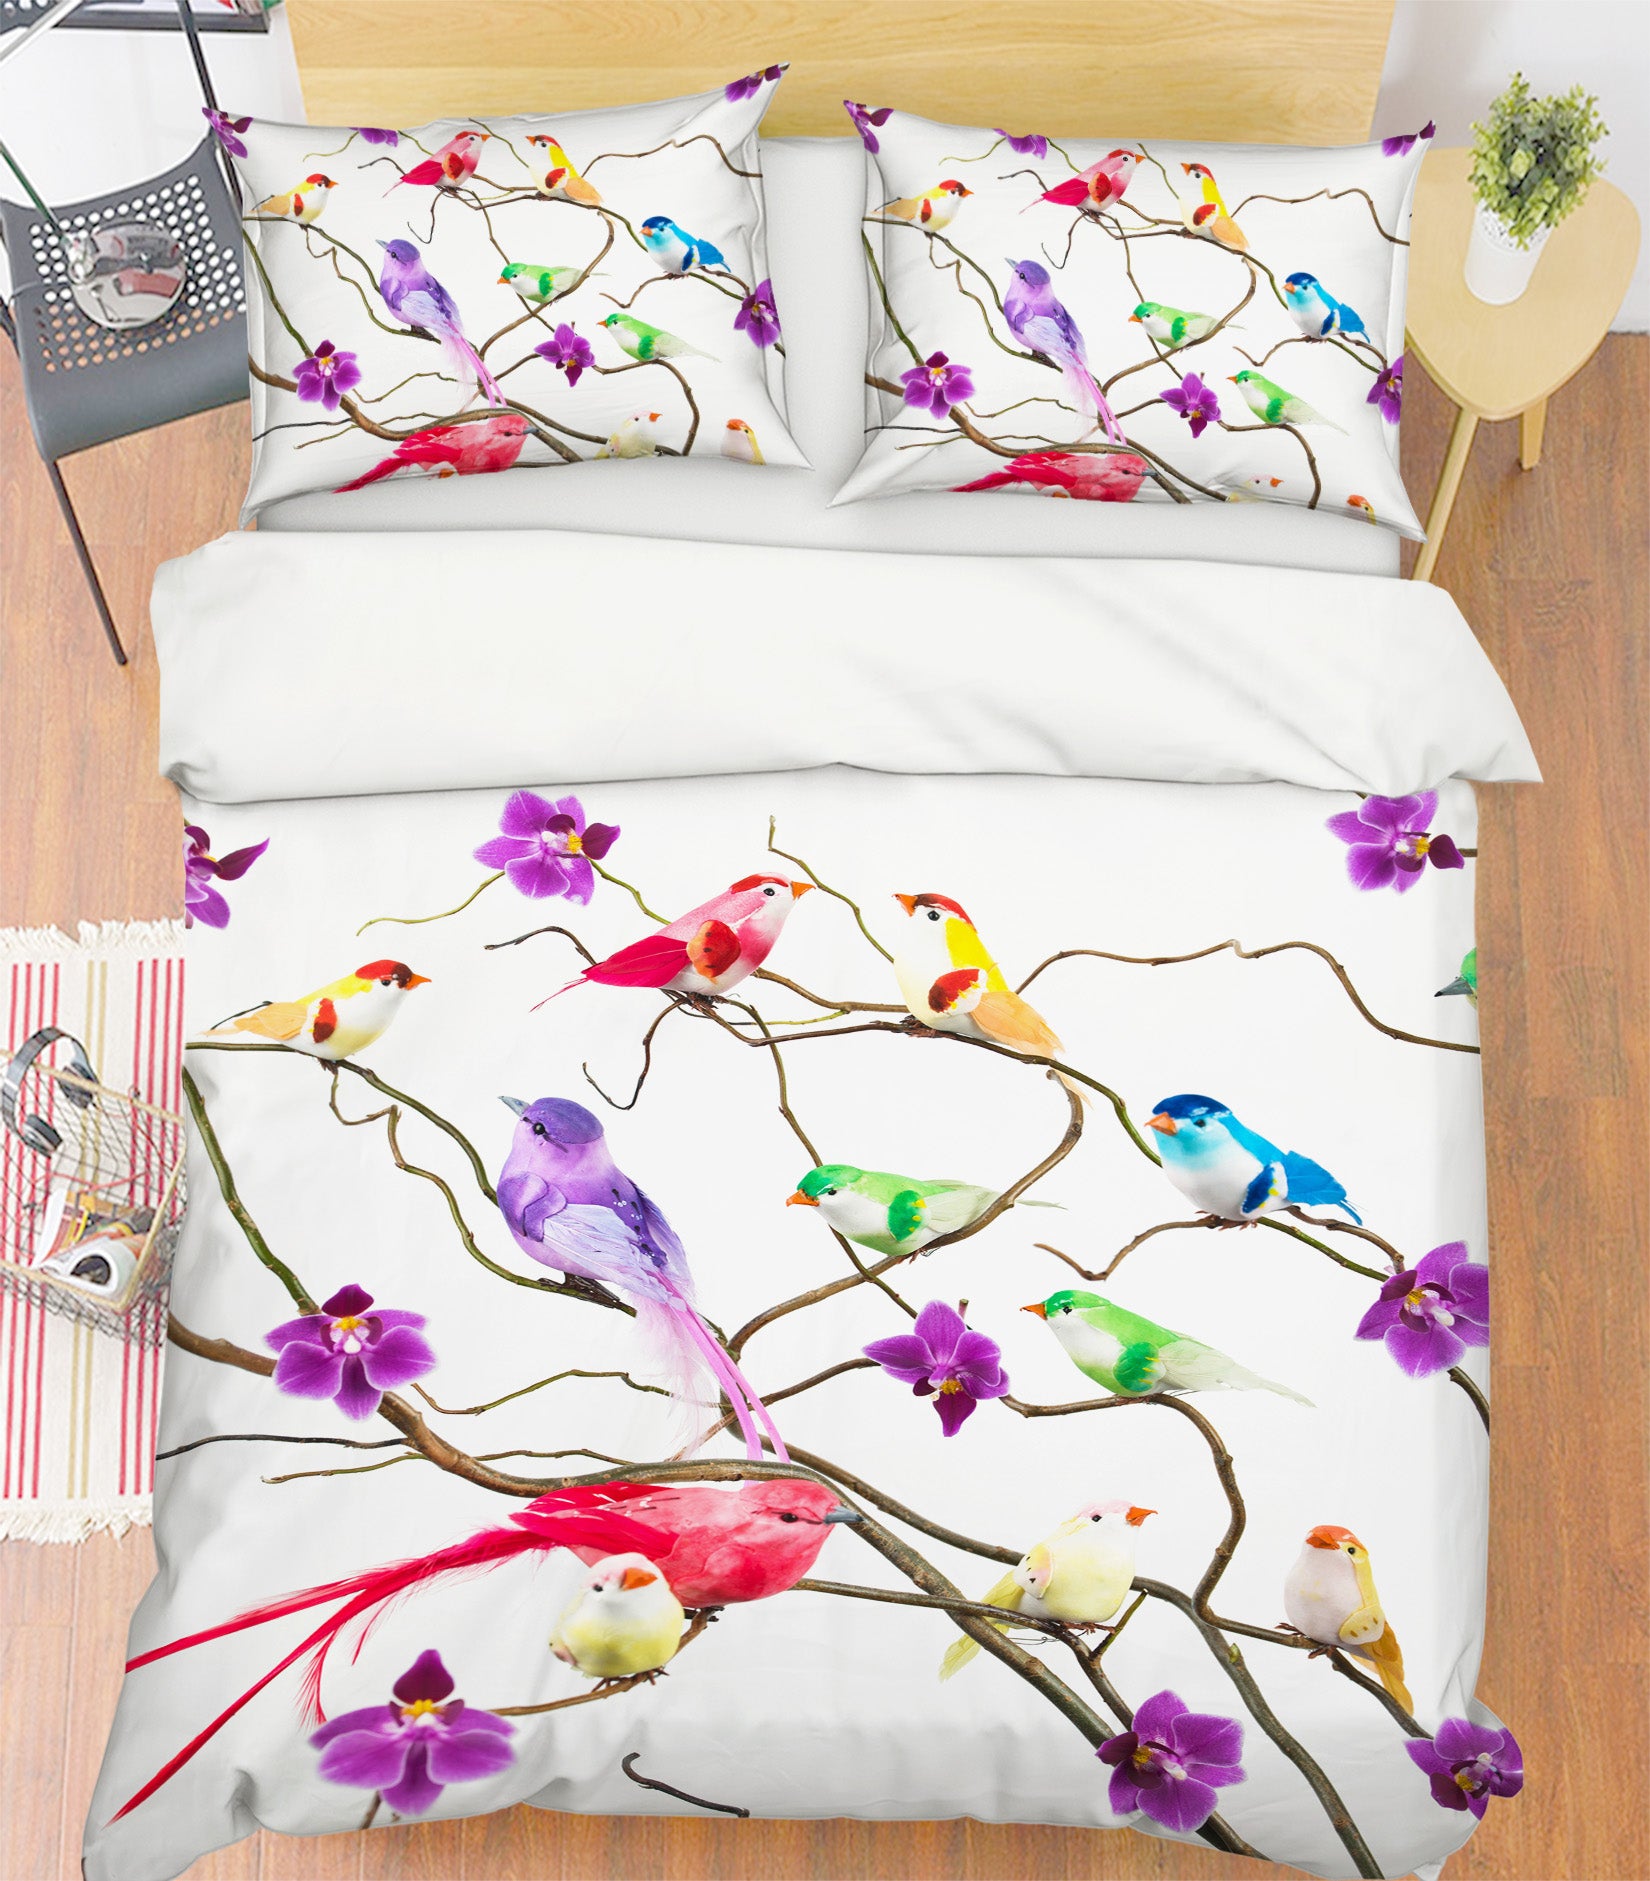 3D Colorful Bird 85167 Assaf Frank Bedding Bed Pillowcases Quilt